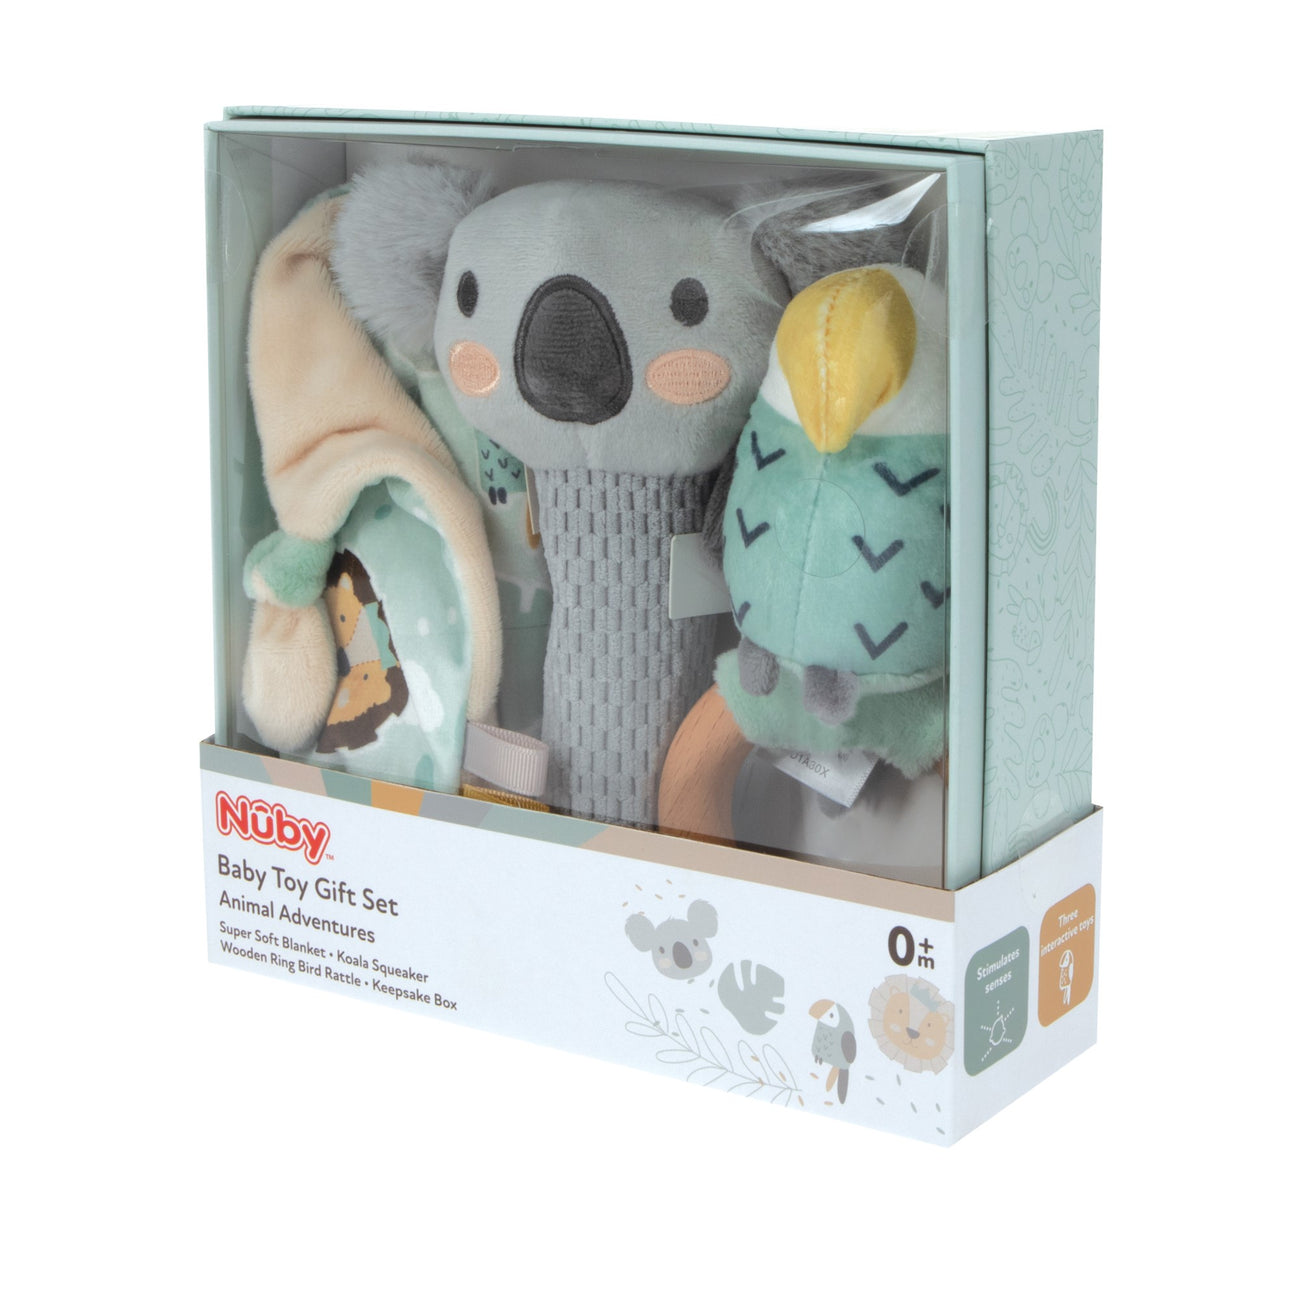 Animal Adventures Baby Toy Gift Set